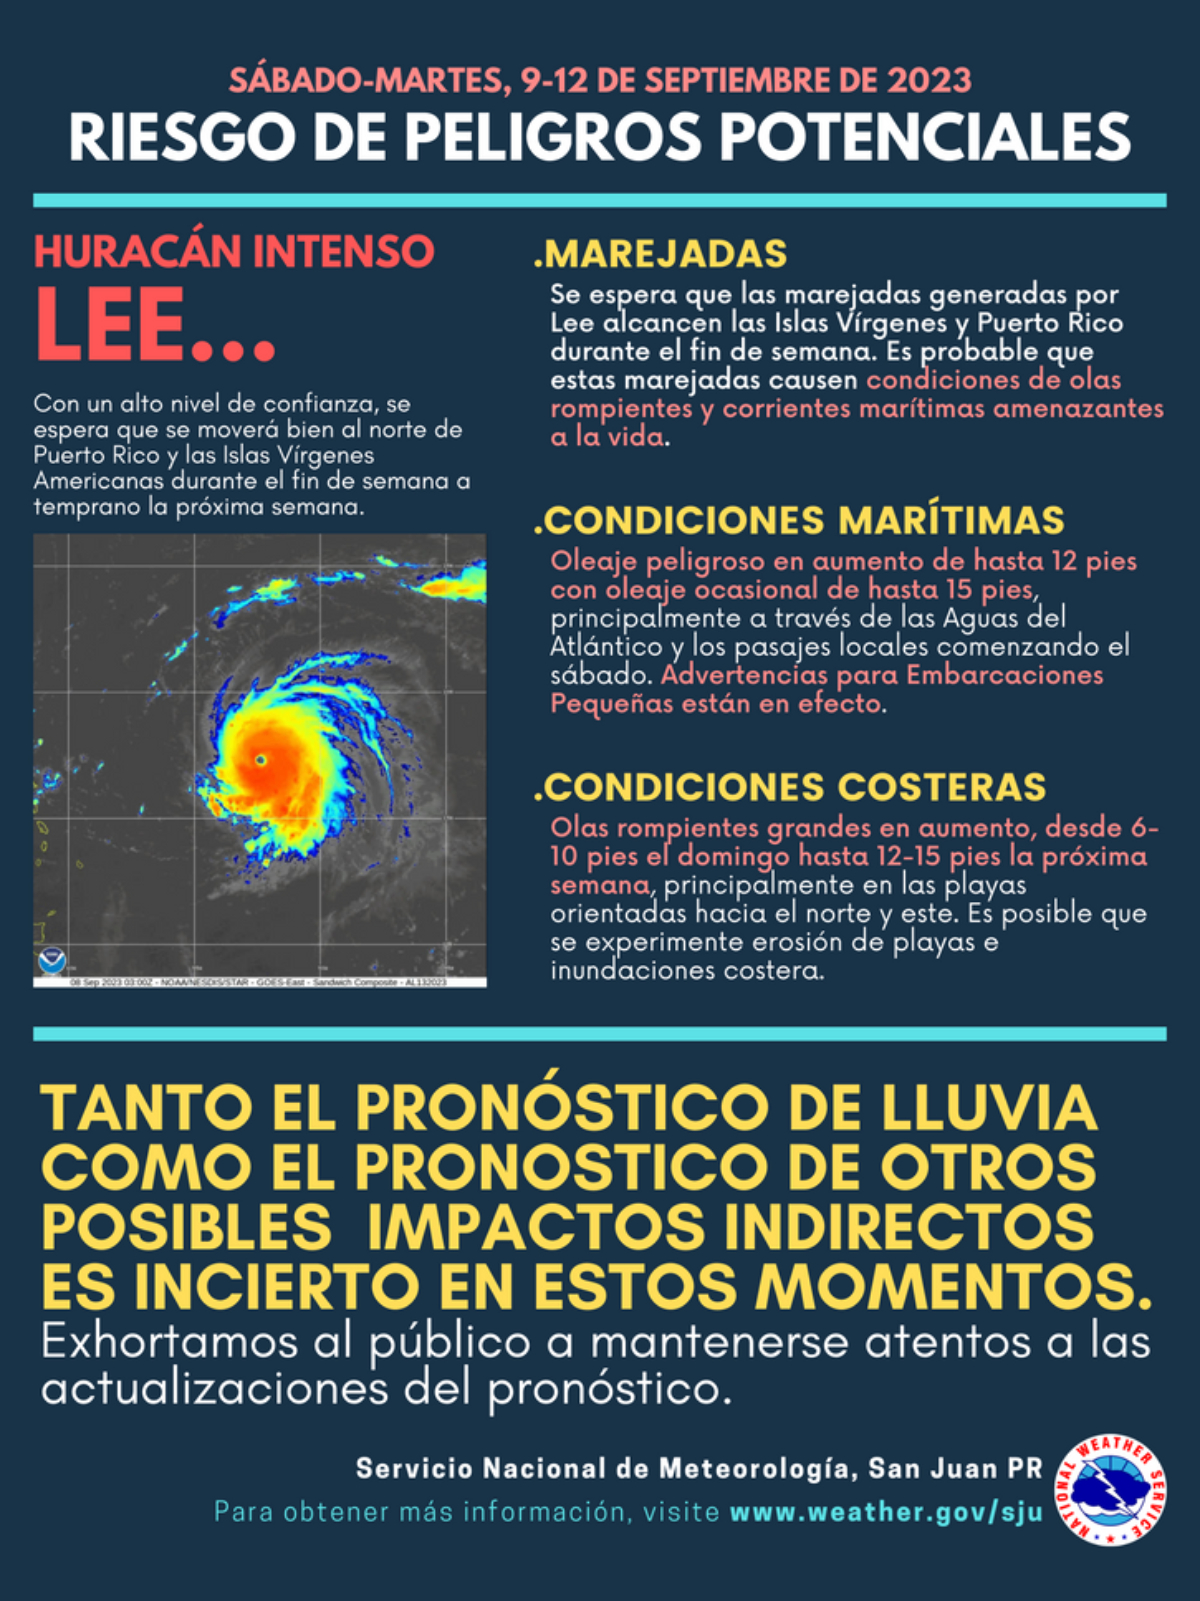 Hurricane Lee warning September 9-12 in Puerto Rico.